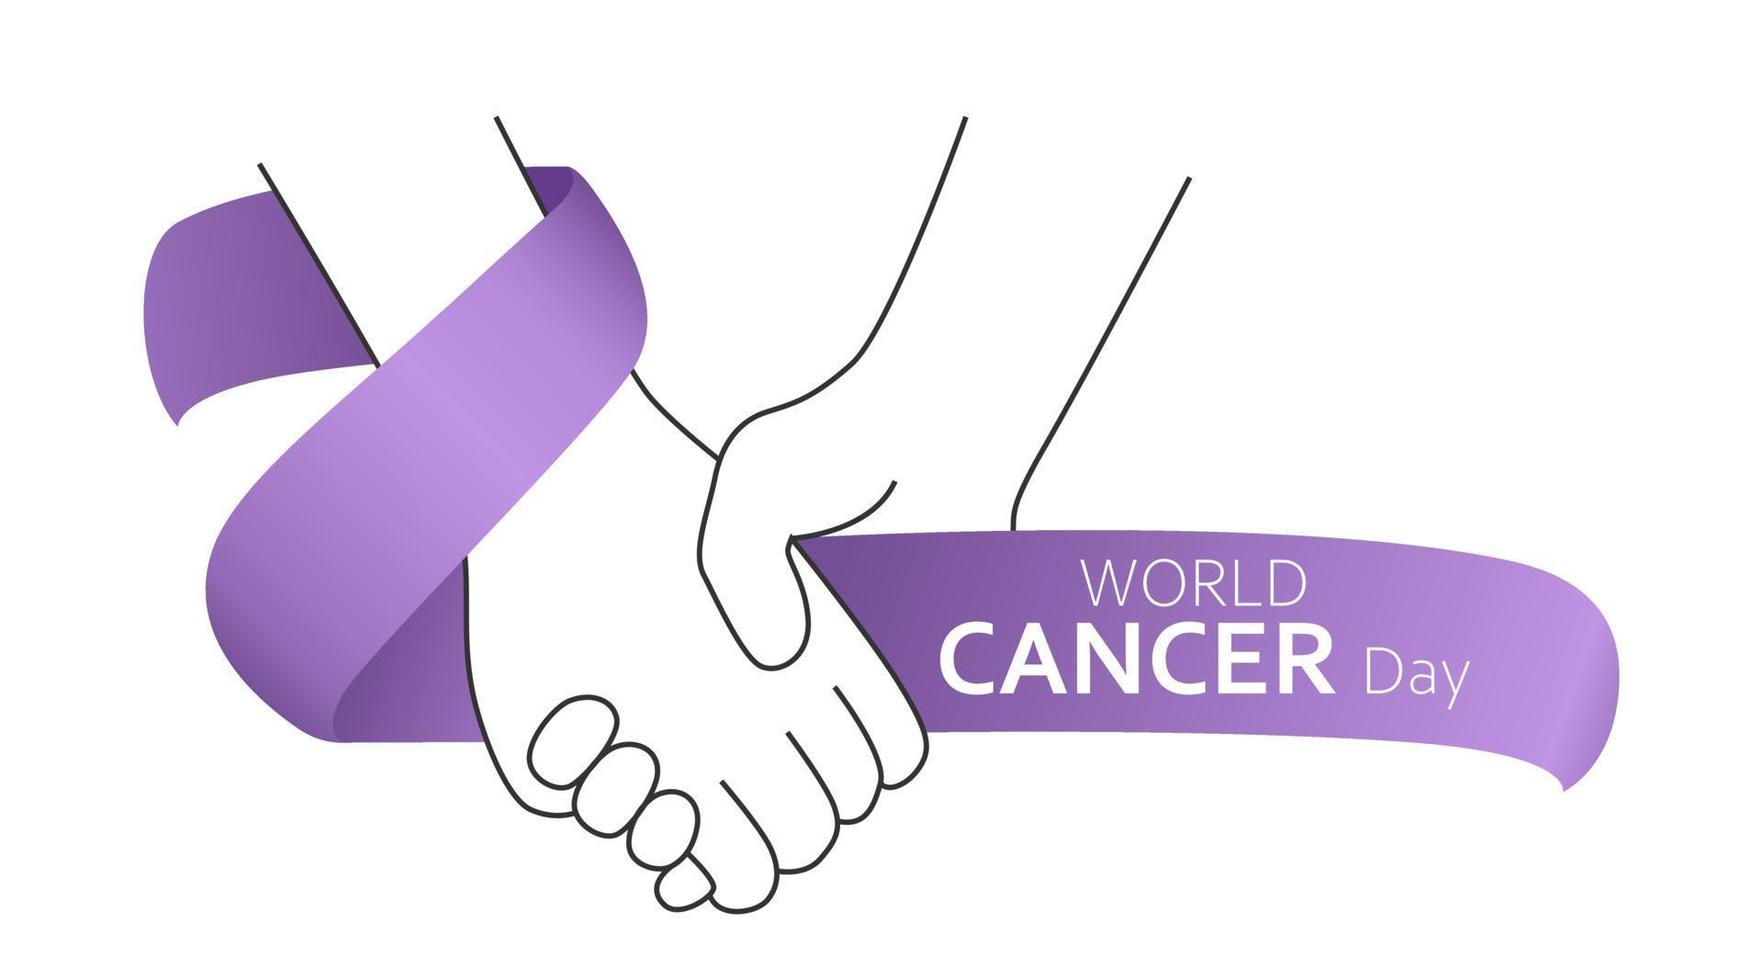 World Cancer Day Awareness Concept Design vector